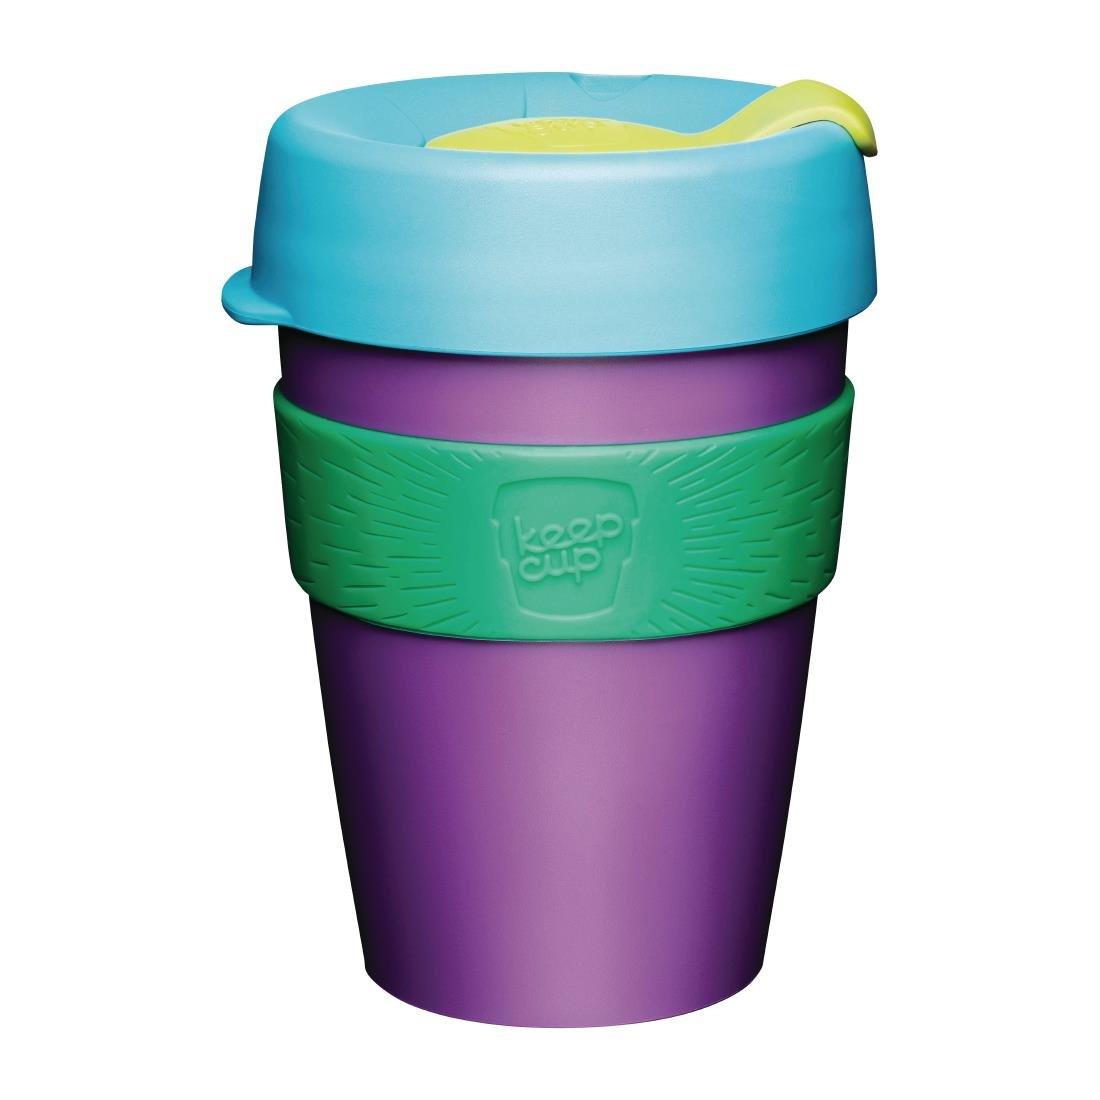 KeepCup Original Reusable Coffee Cup Element 12oz - Each - DY484 - 1